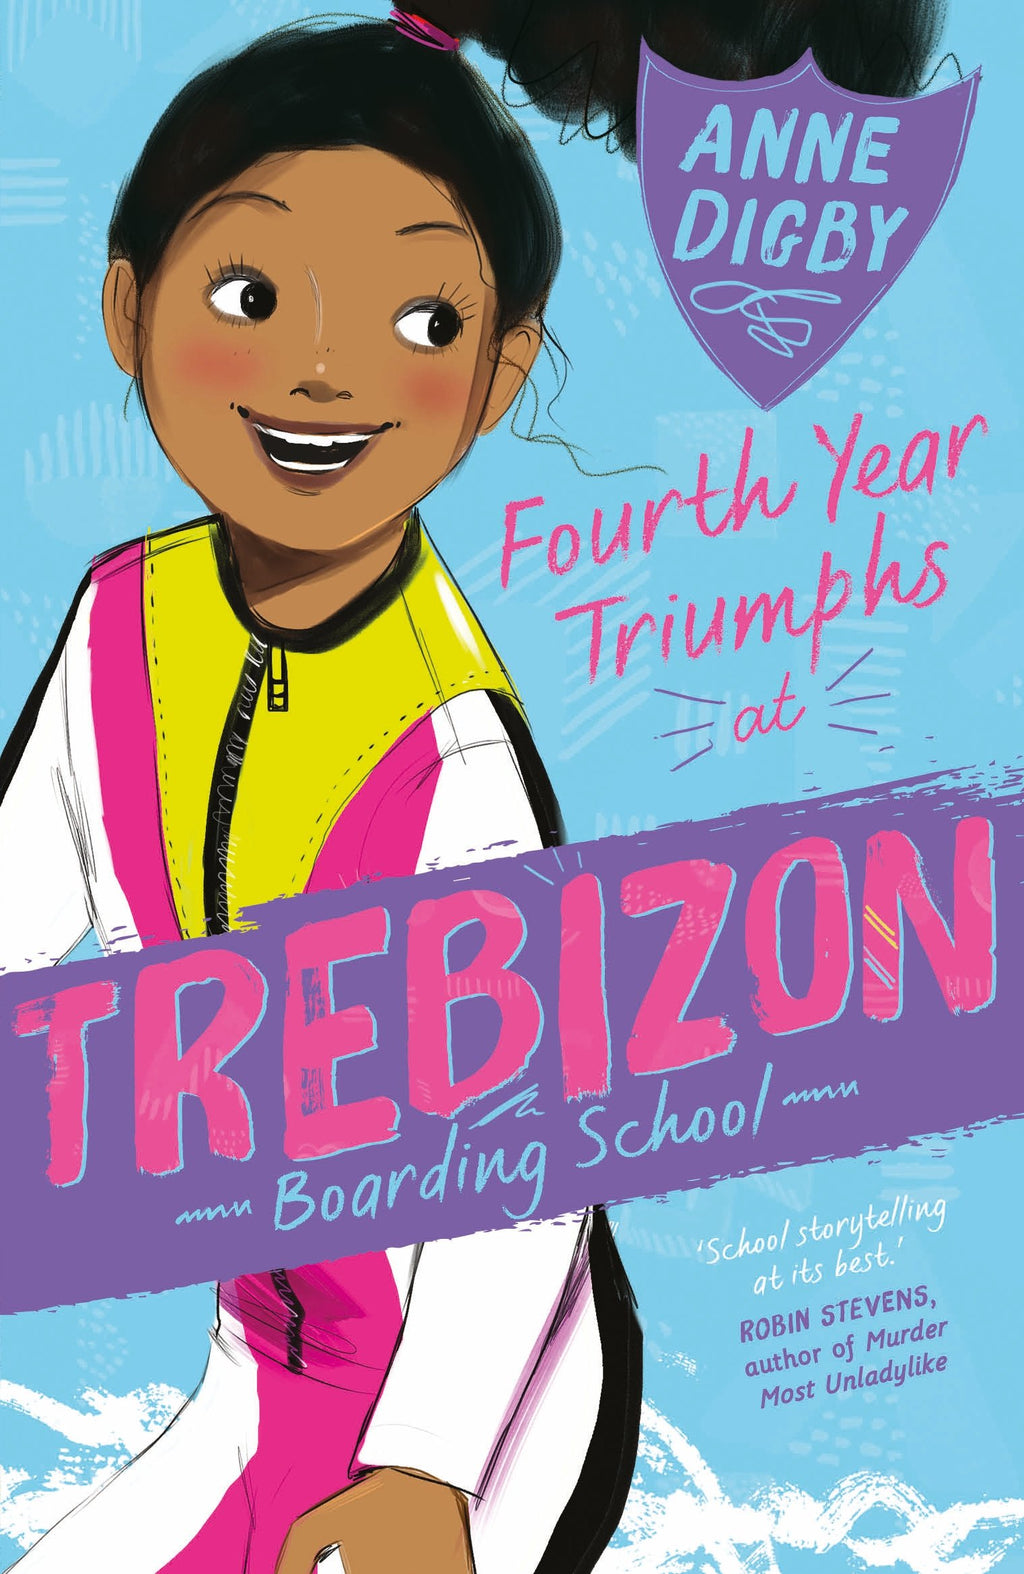 Trebizon (10): Fourth Year triumphs at Trebizon